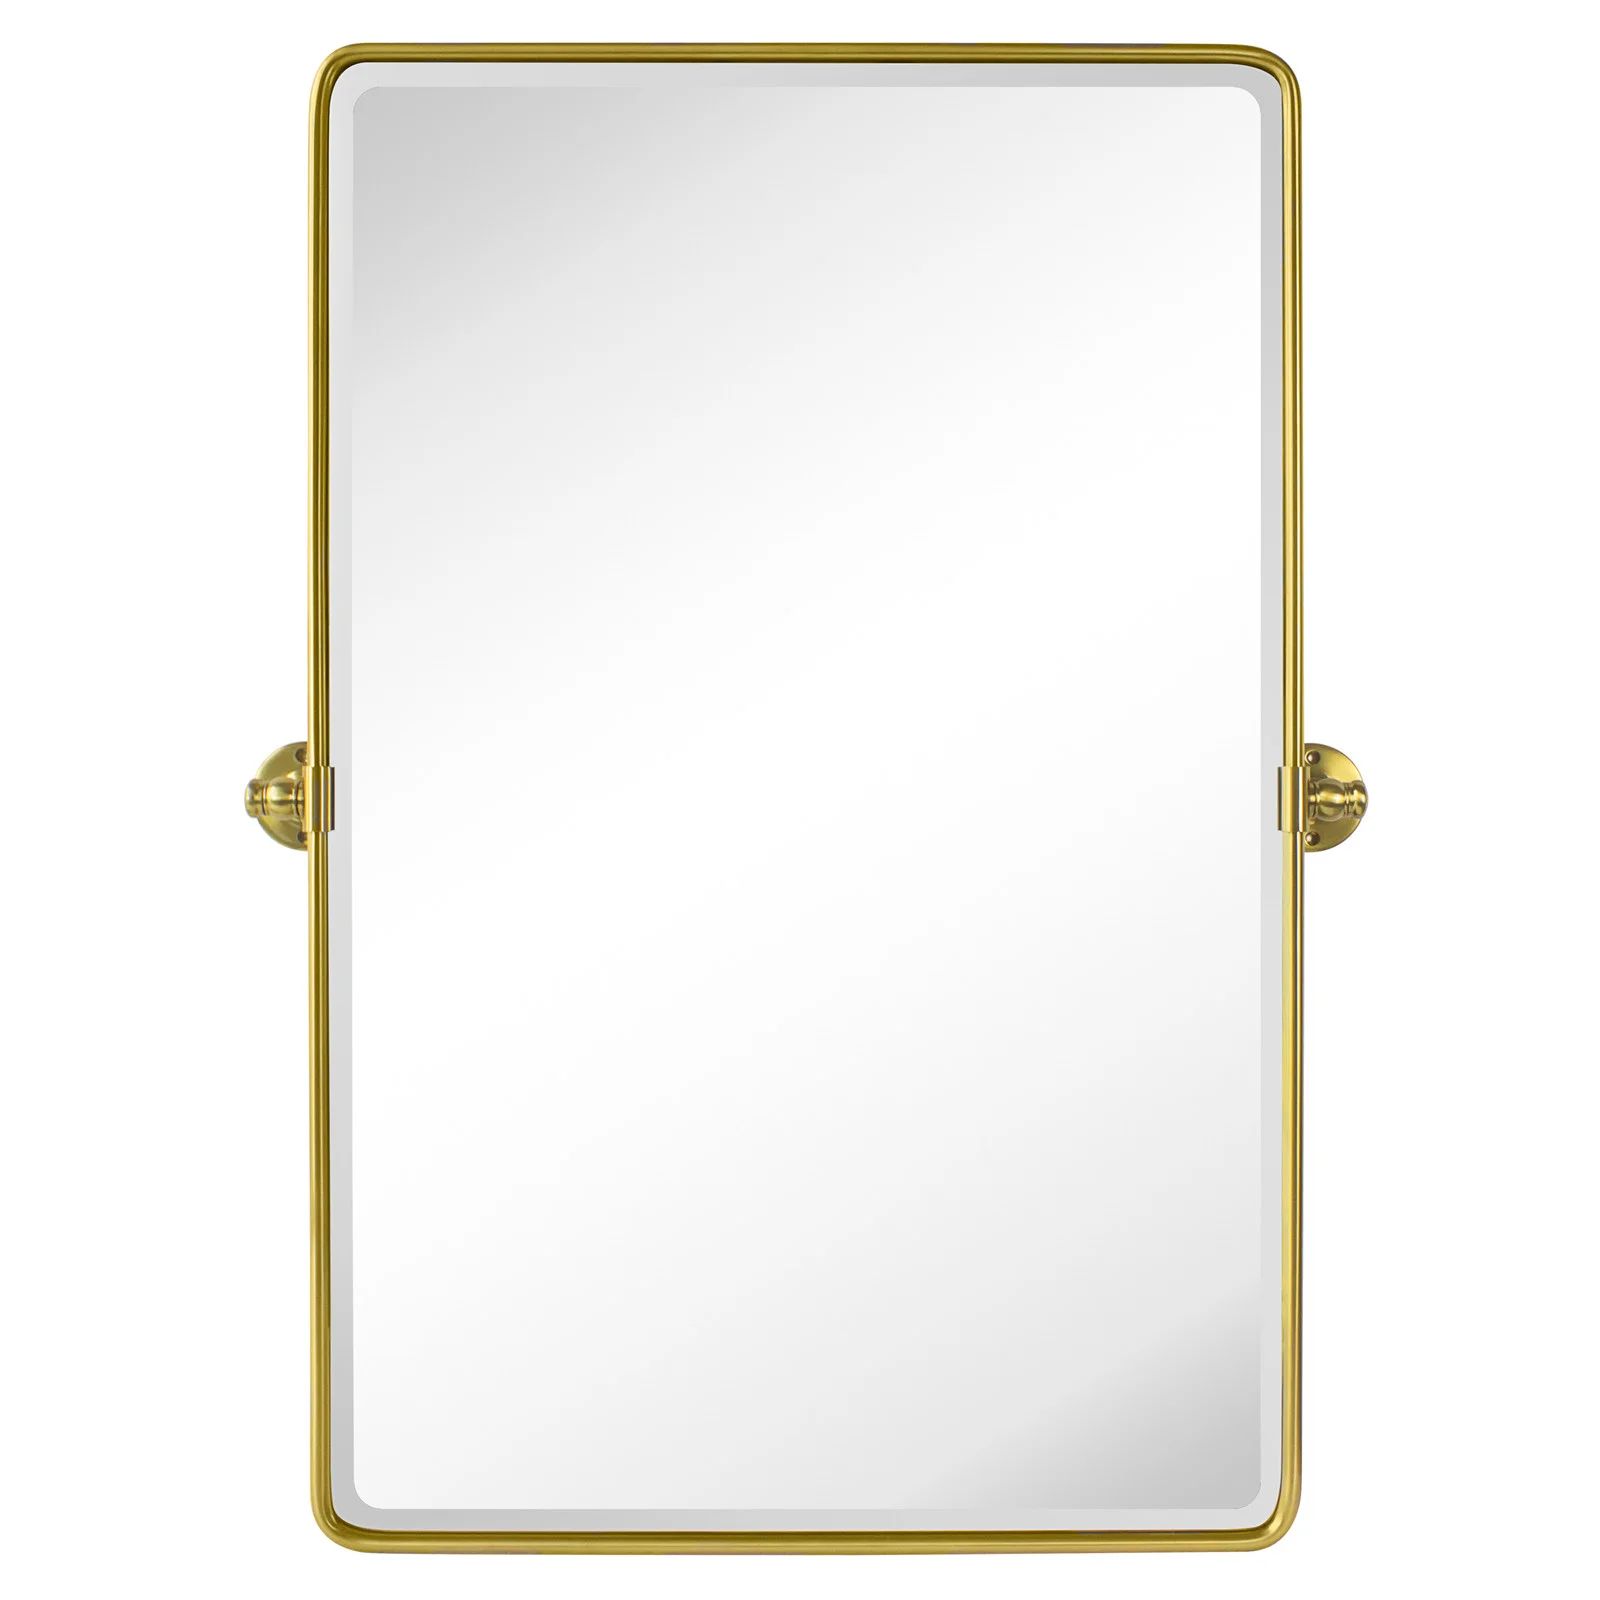 Woodvale Rectangle Metal Wall Mirror | Wayfair Professional